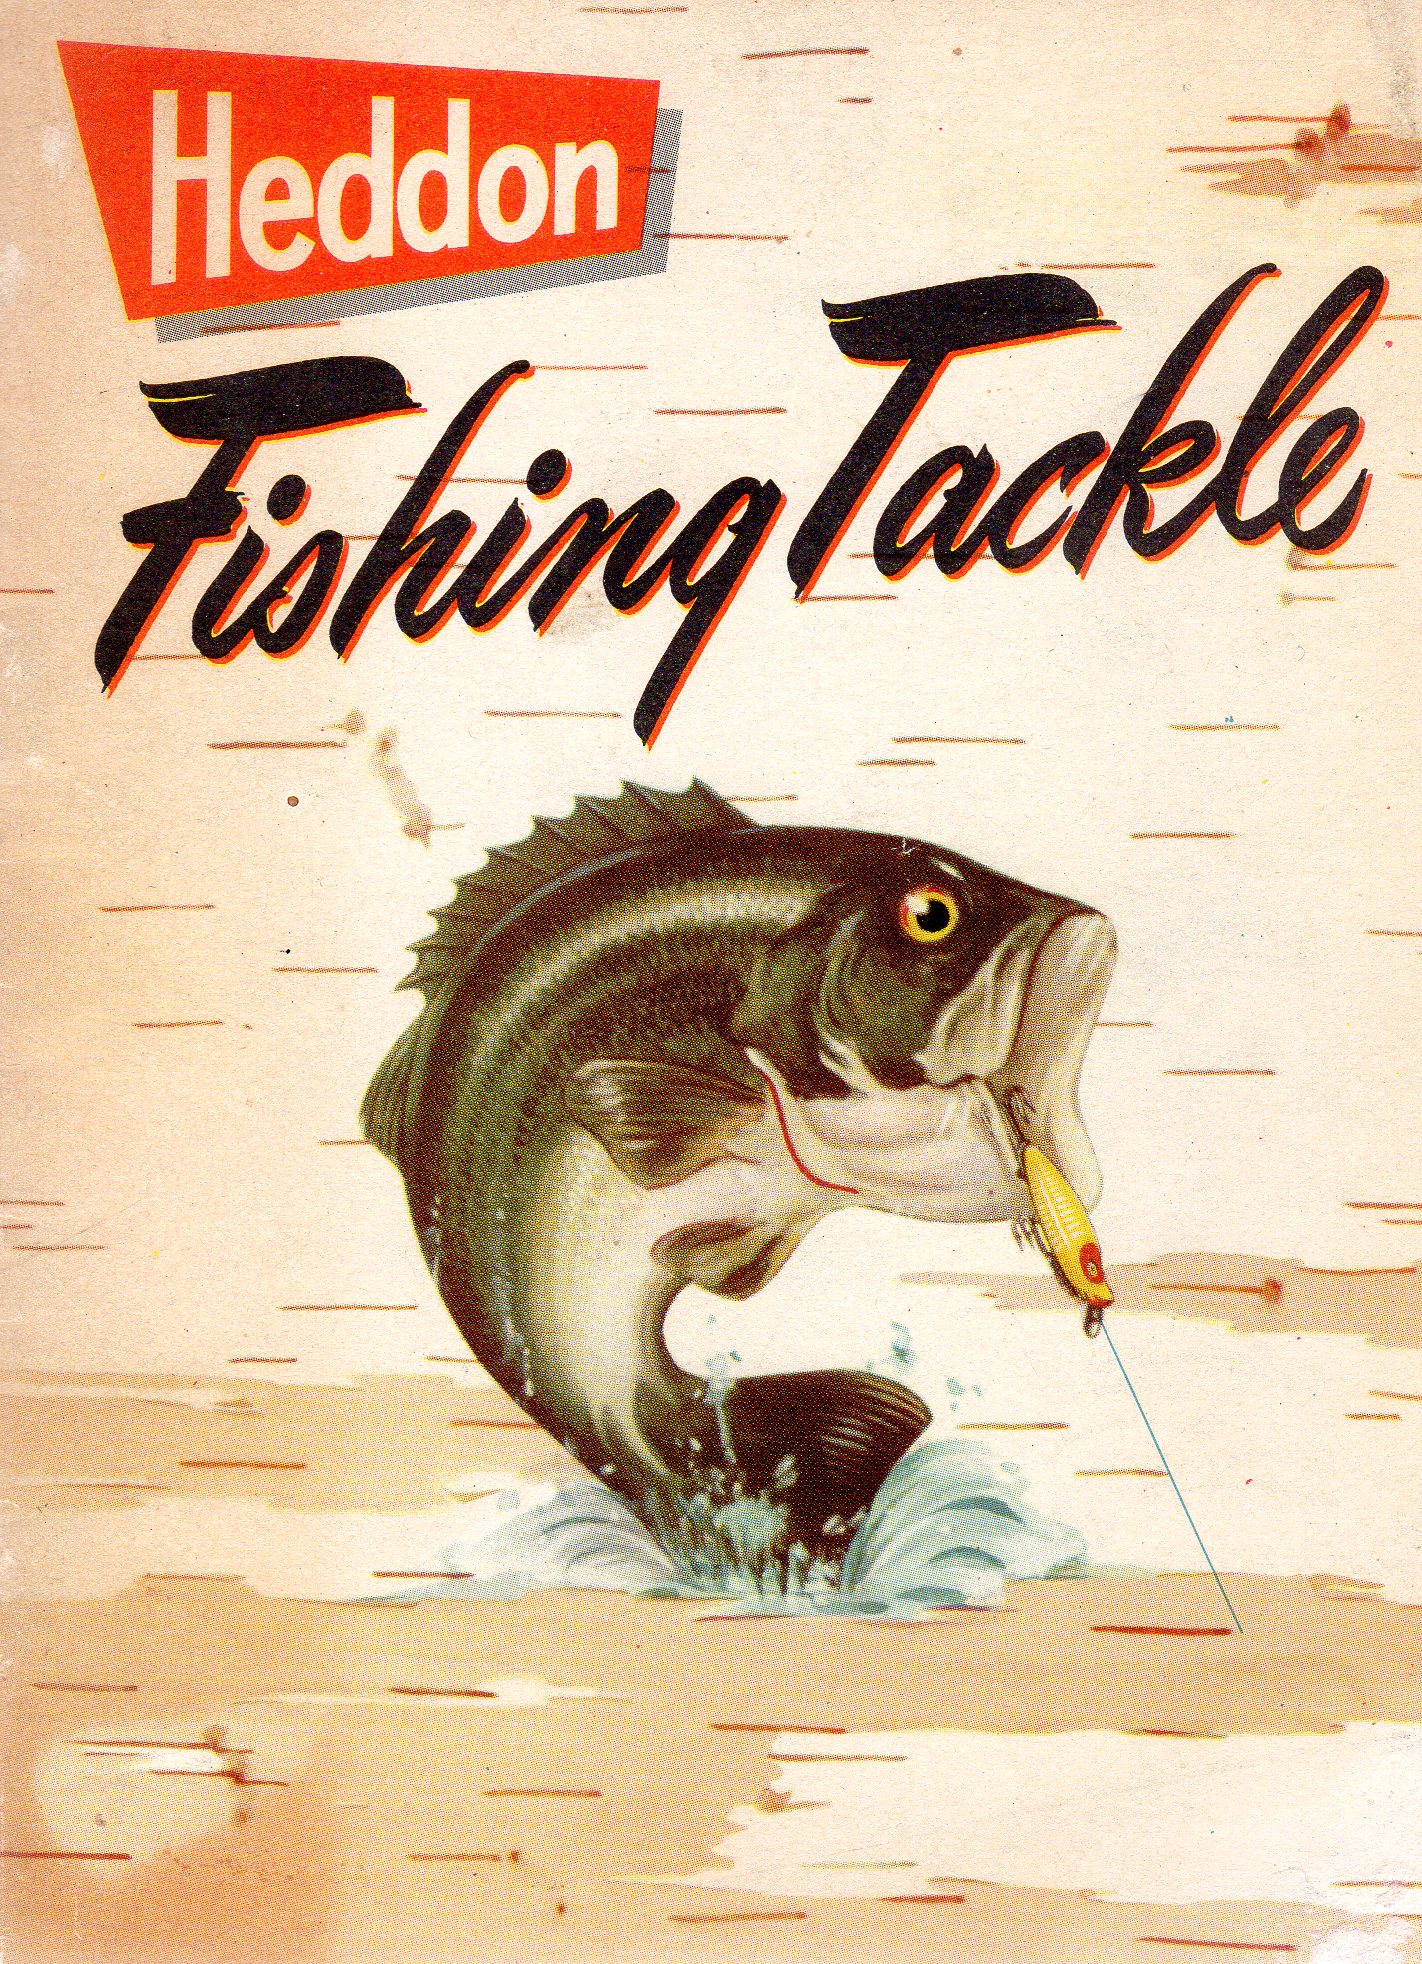 Heddon Fishing Tackle catalog by James Heddon's Sons: Near Fine Soft cover  (1952)